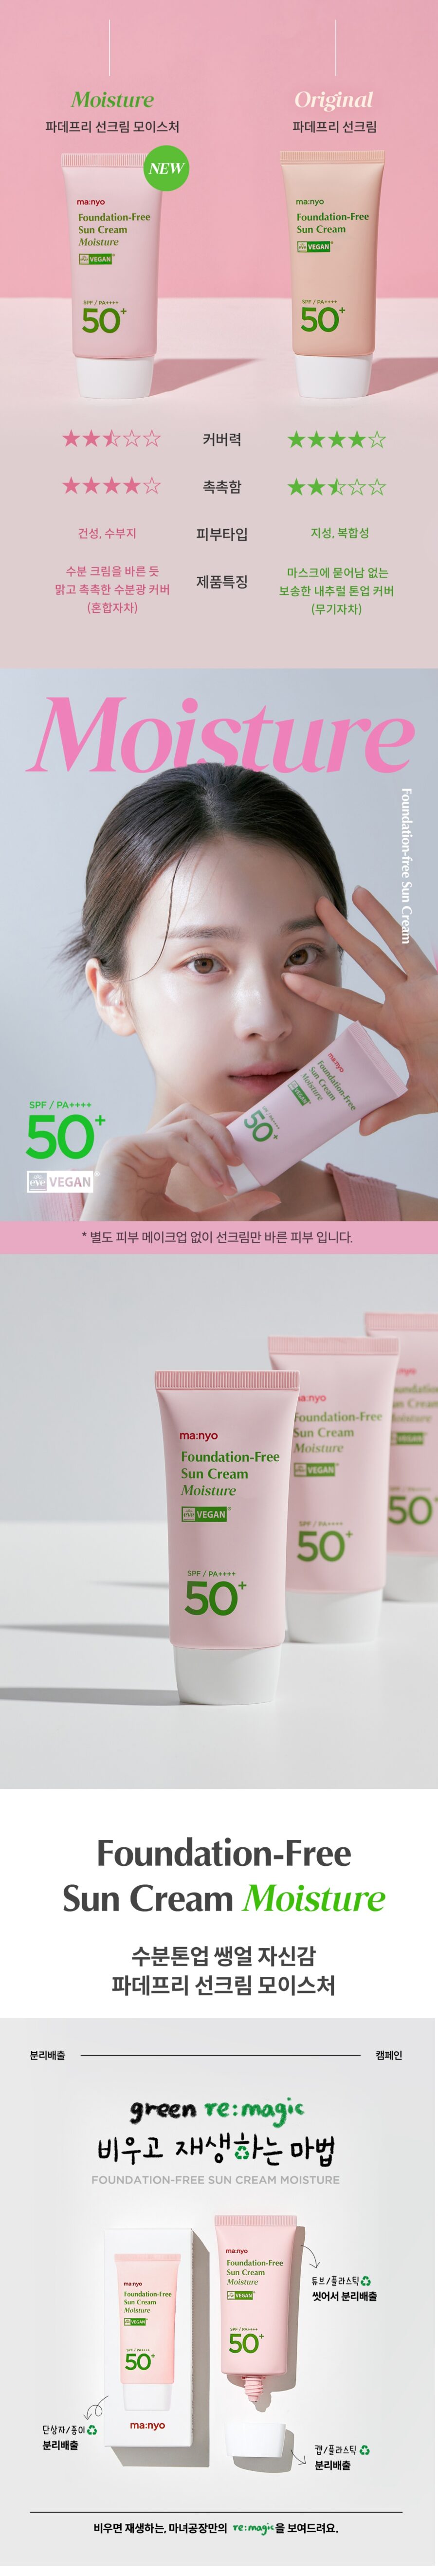 Manyo Factory Foundation Free Sun Cream Moisture korean skincare product online shop malaysia macau poland5